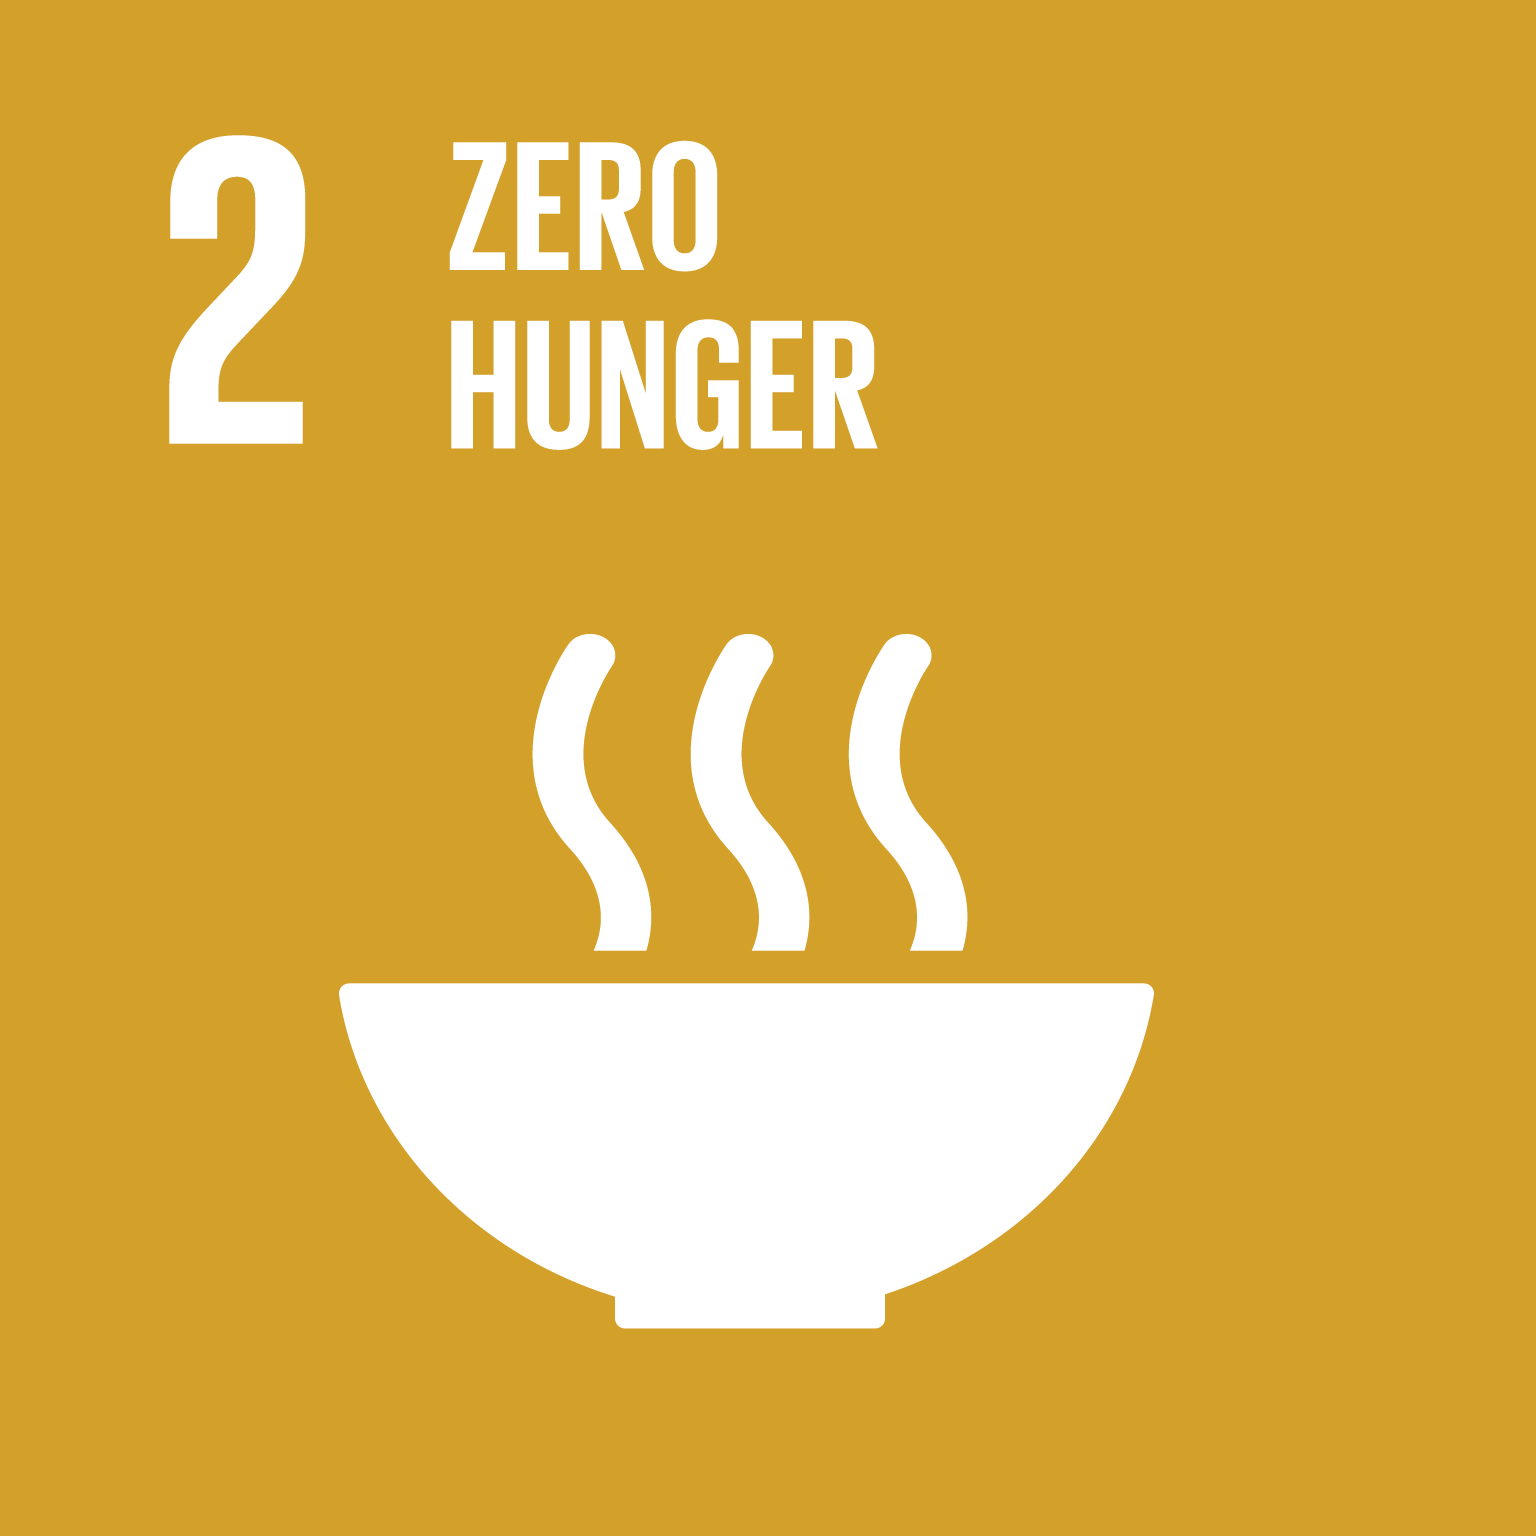 Sustainable Development Goals Book Club African Chapter Inaugural Book Picks - SDG 2 - Zero Hunger
